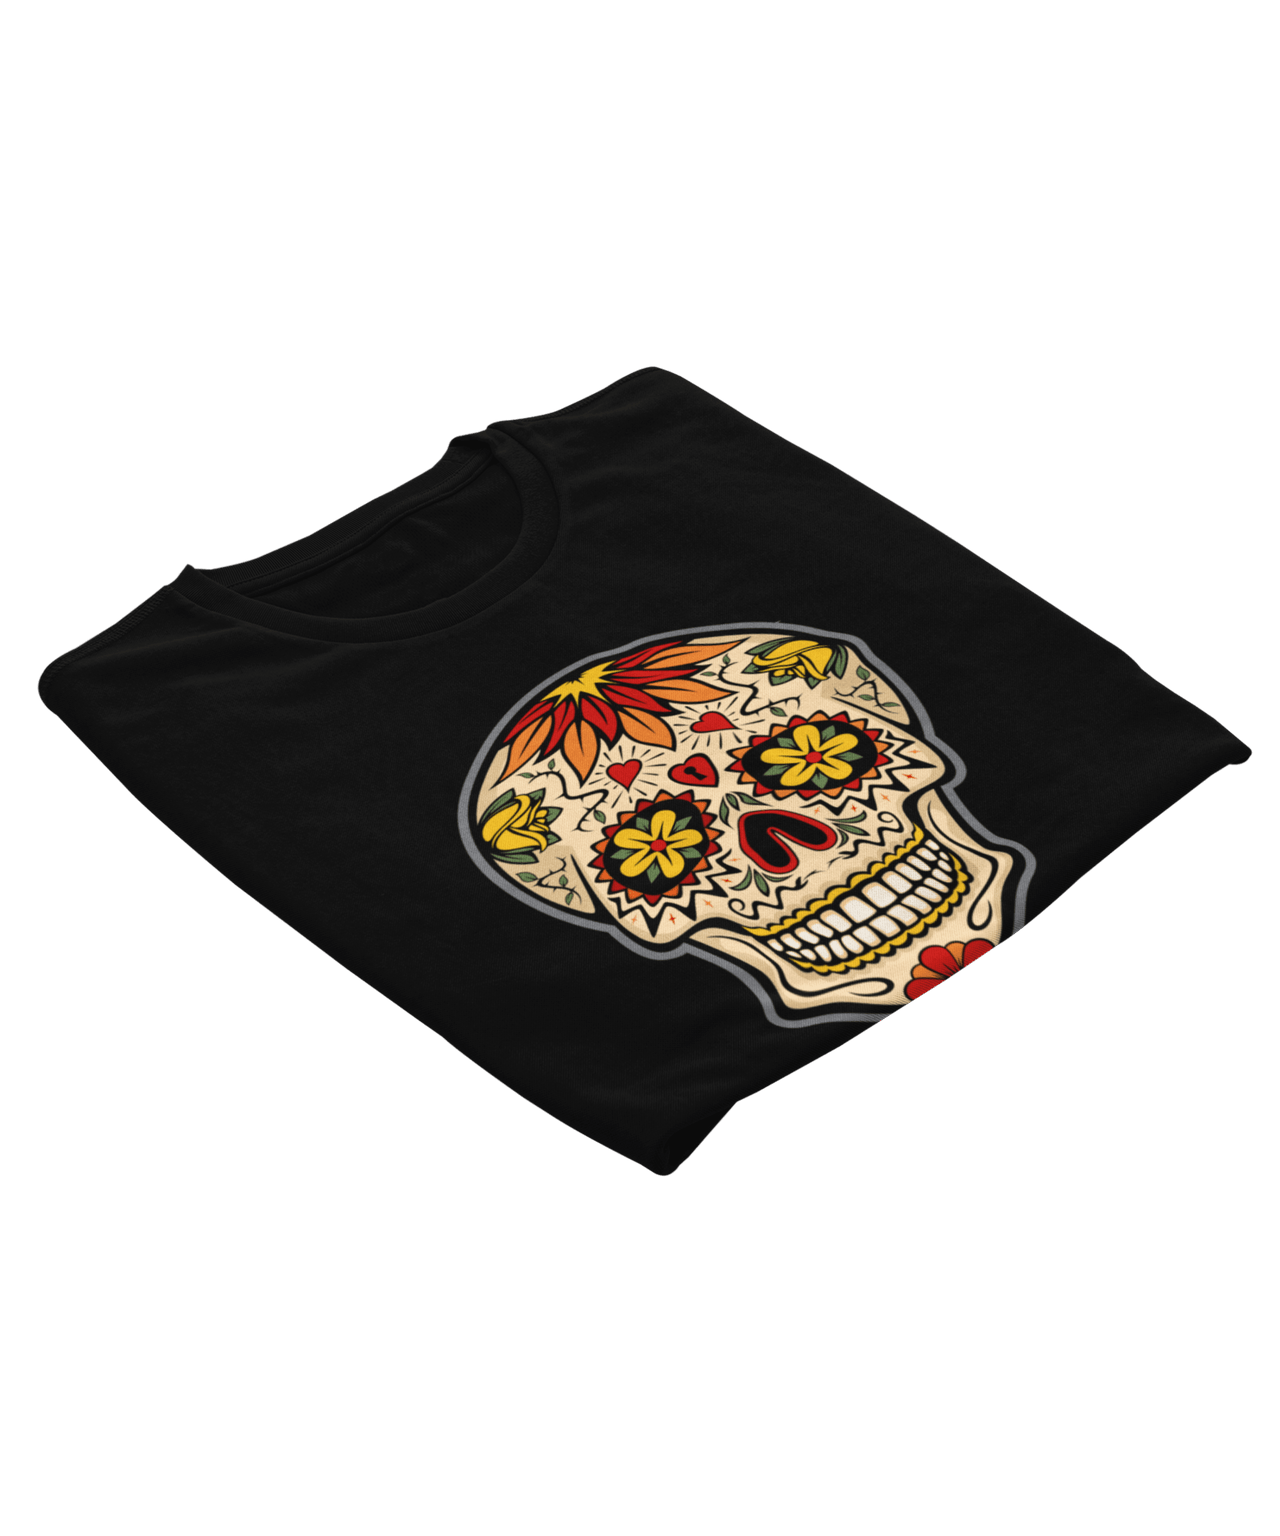 Skull Tattoo Design Adult Unisex Unisex T-Shirt 8Ball